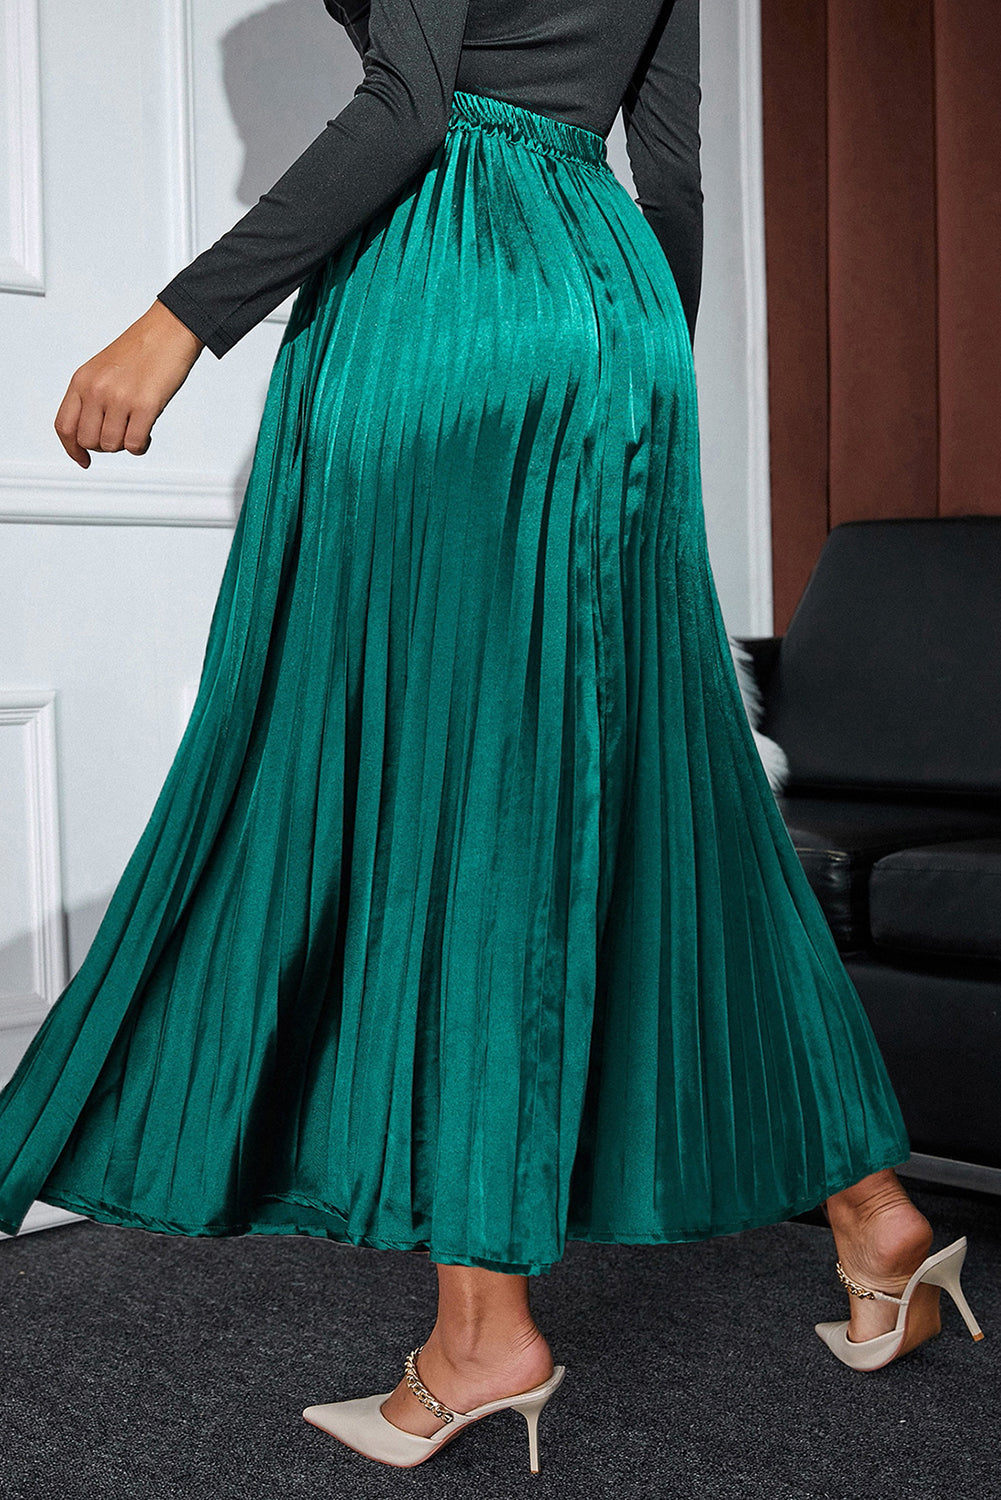 Blackish Green Satin Elastic Waist Pleated Maxi Skirt MEO0213